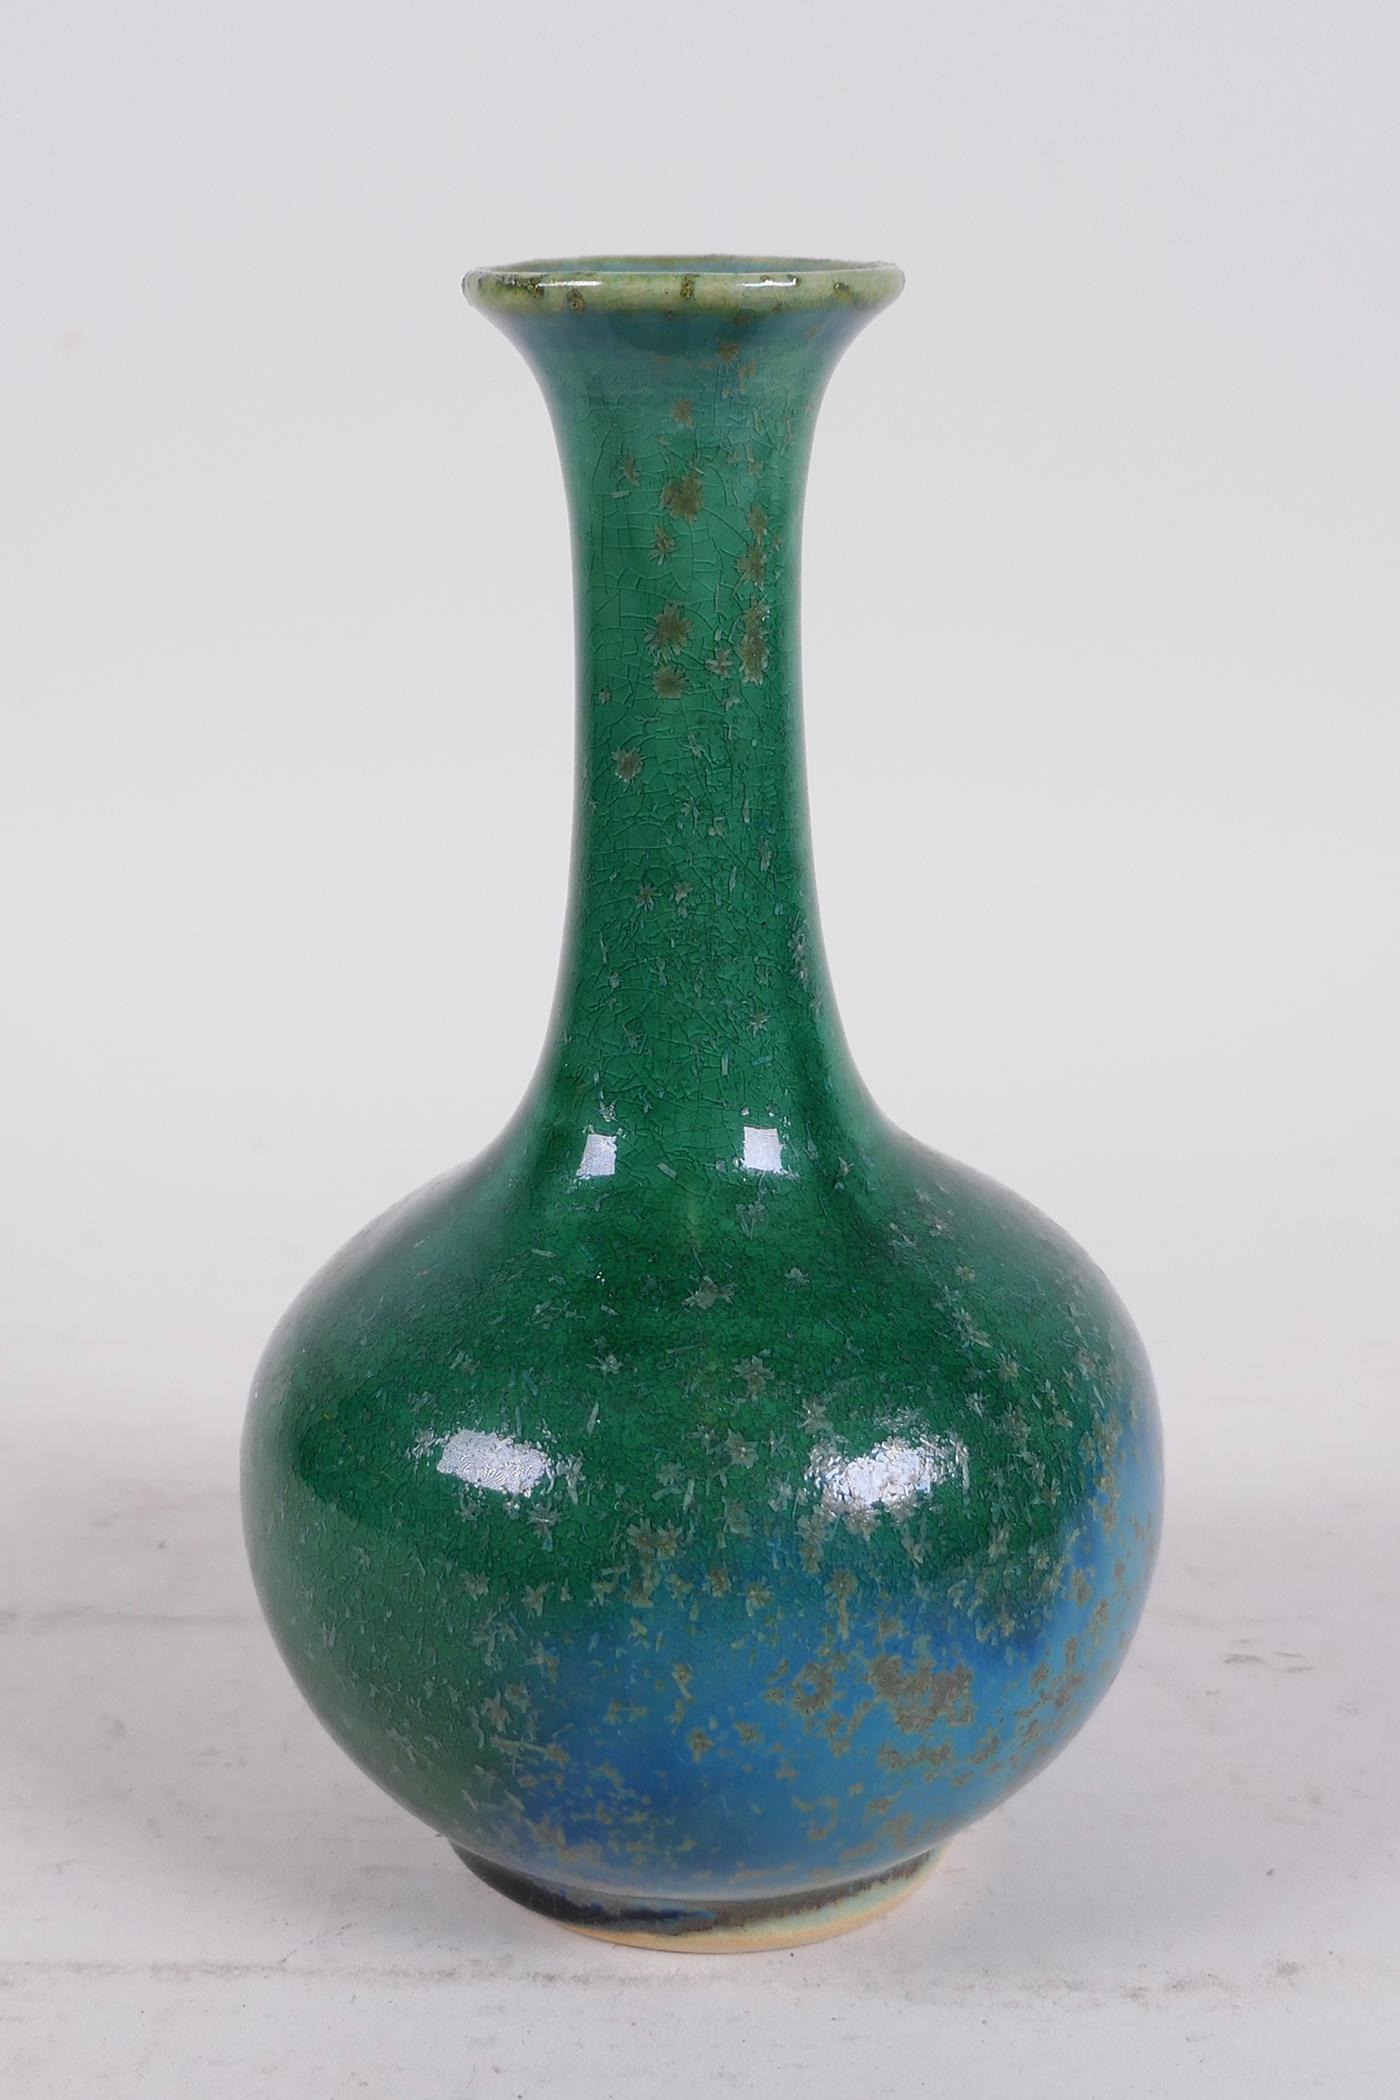 A Chinese mottled green glazed pottery bottle vase, 6" high - Image 3 of 4